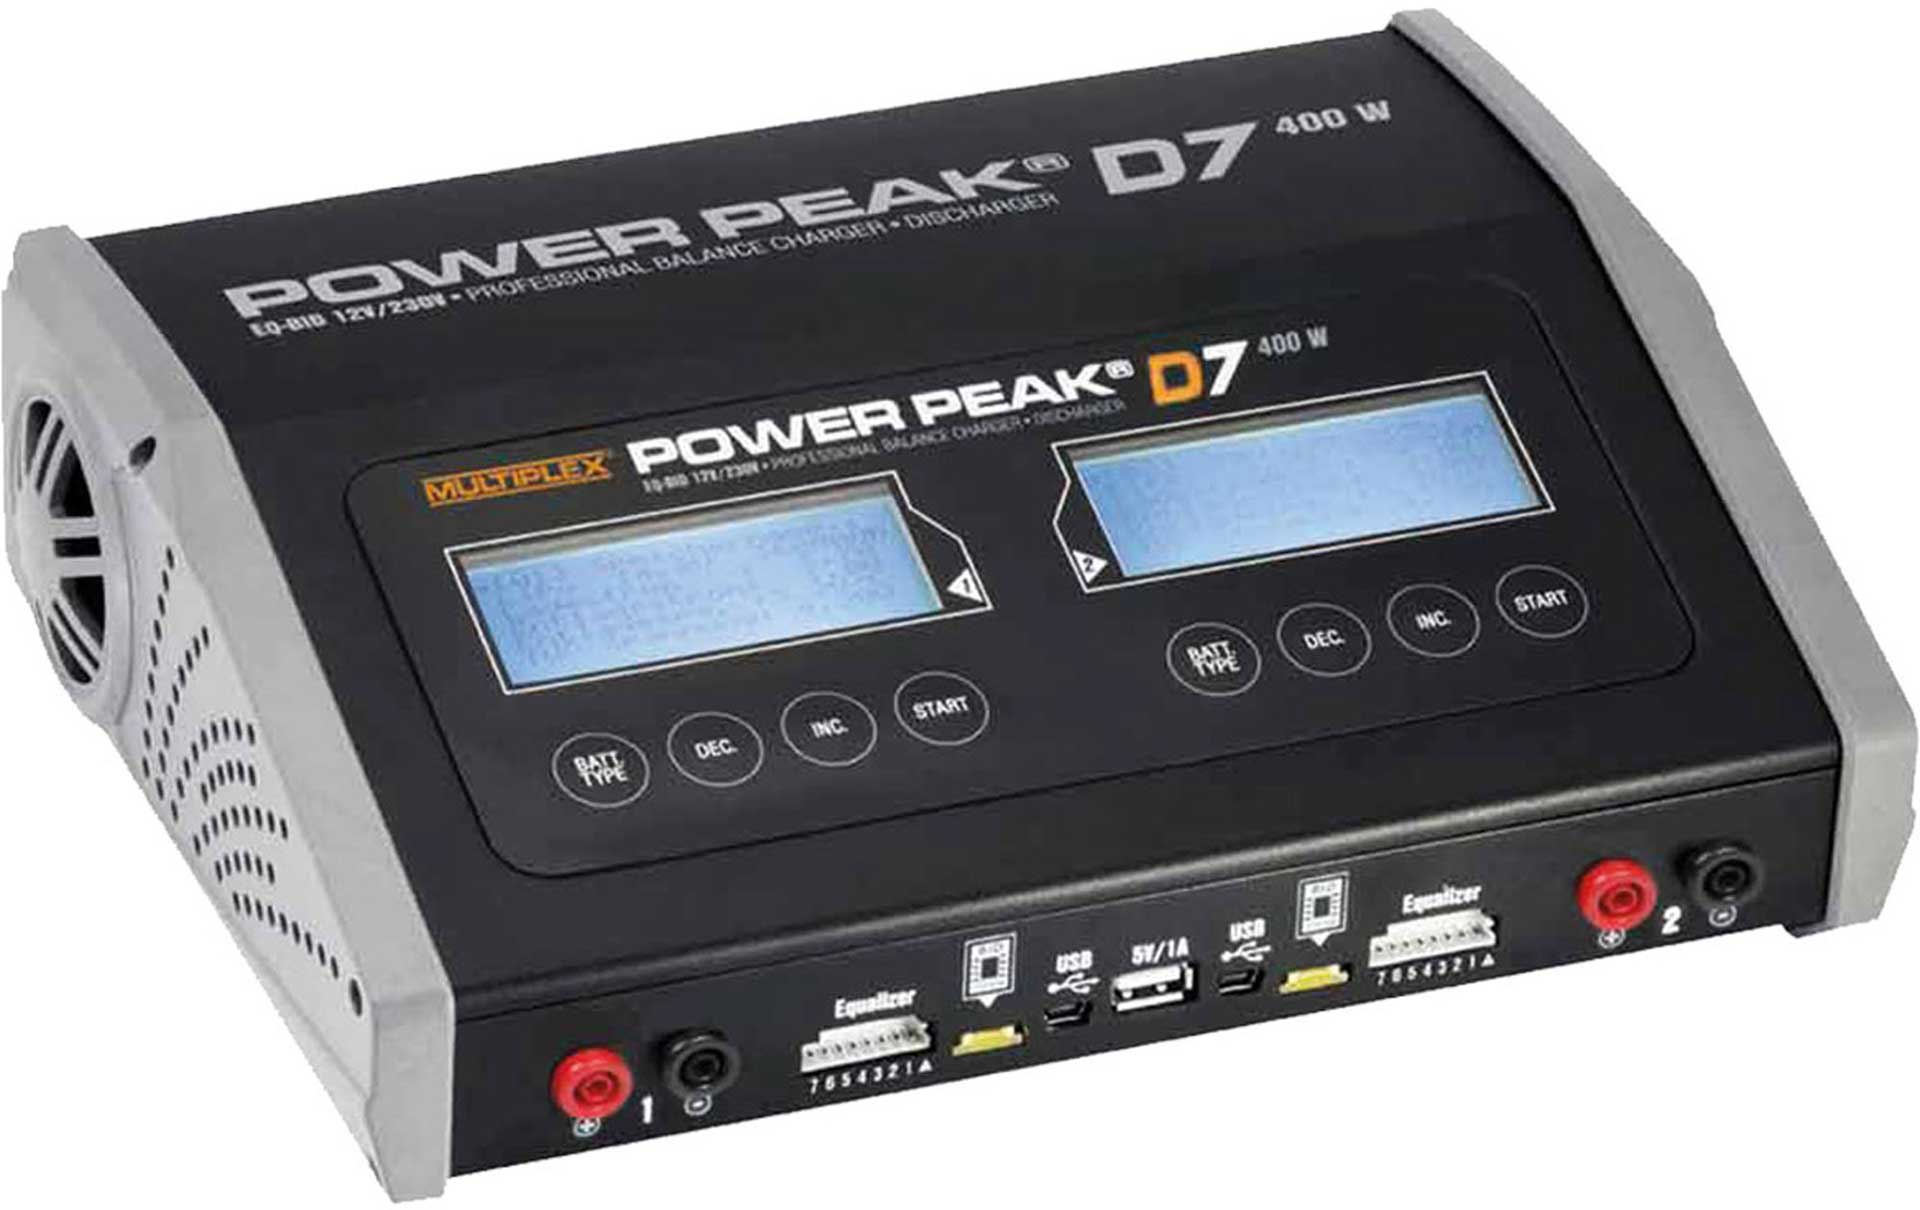 POWER PEAK D7 EQ-BID 400W CHARGER 1-7S, CHARGING CURRENT -20A, 12/230V , 2